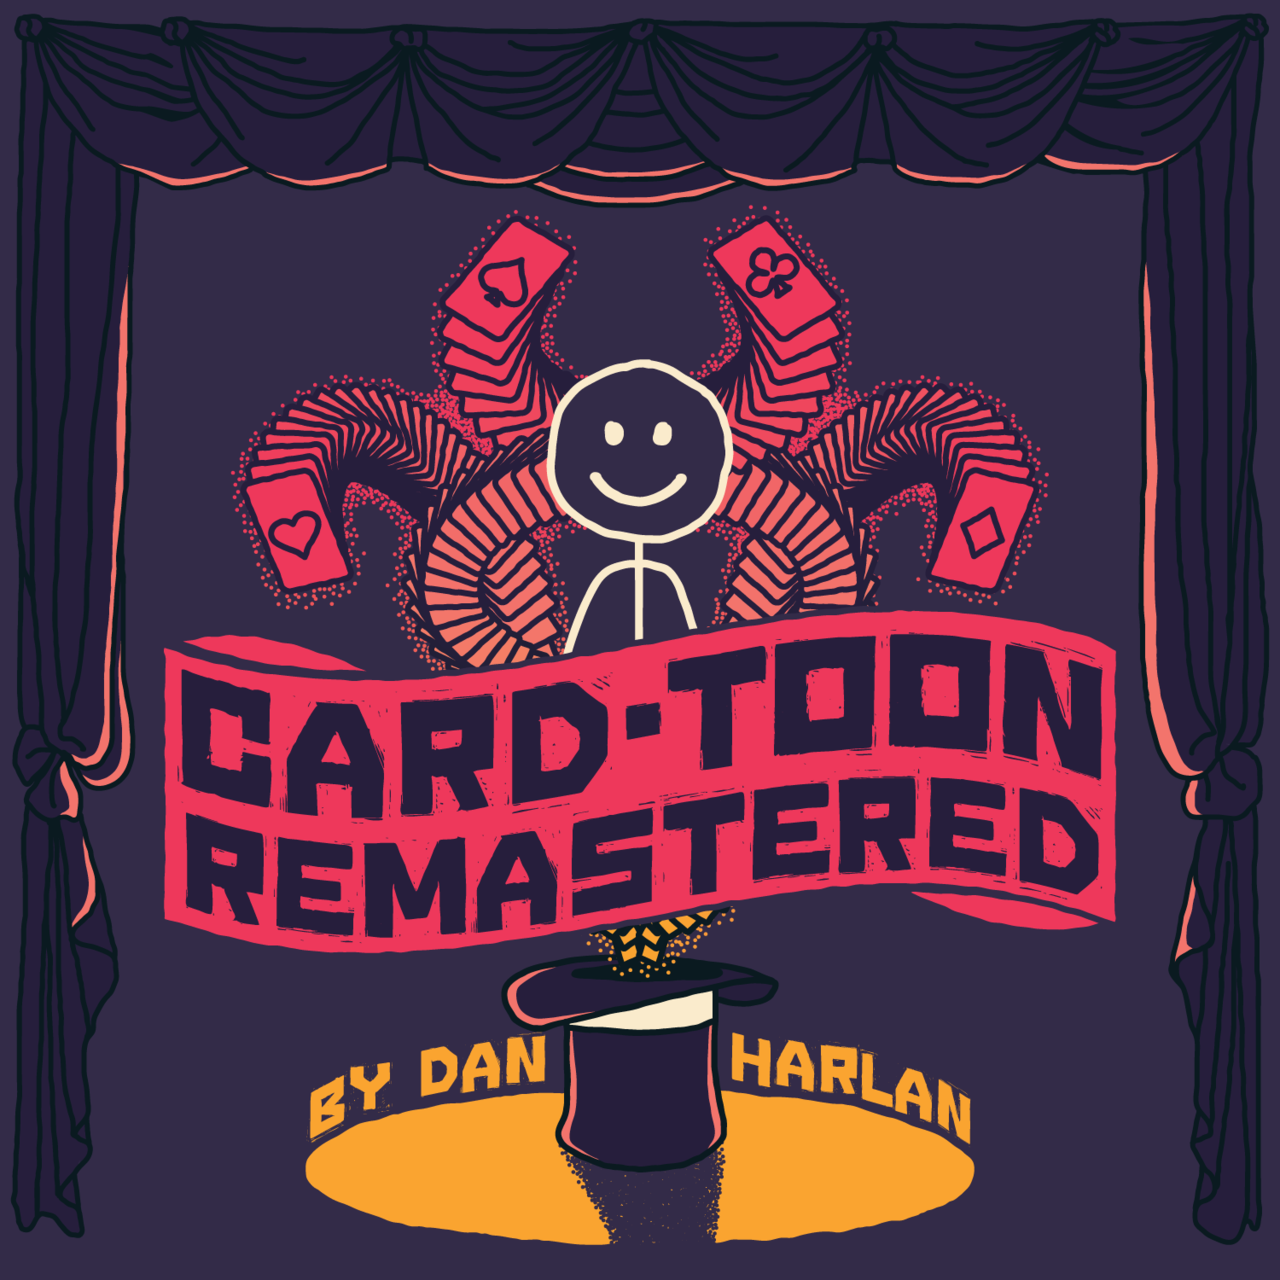 Card-Toon Remastered by Dan Harlan (Mp4 Video Magic Download)